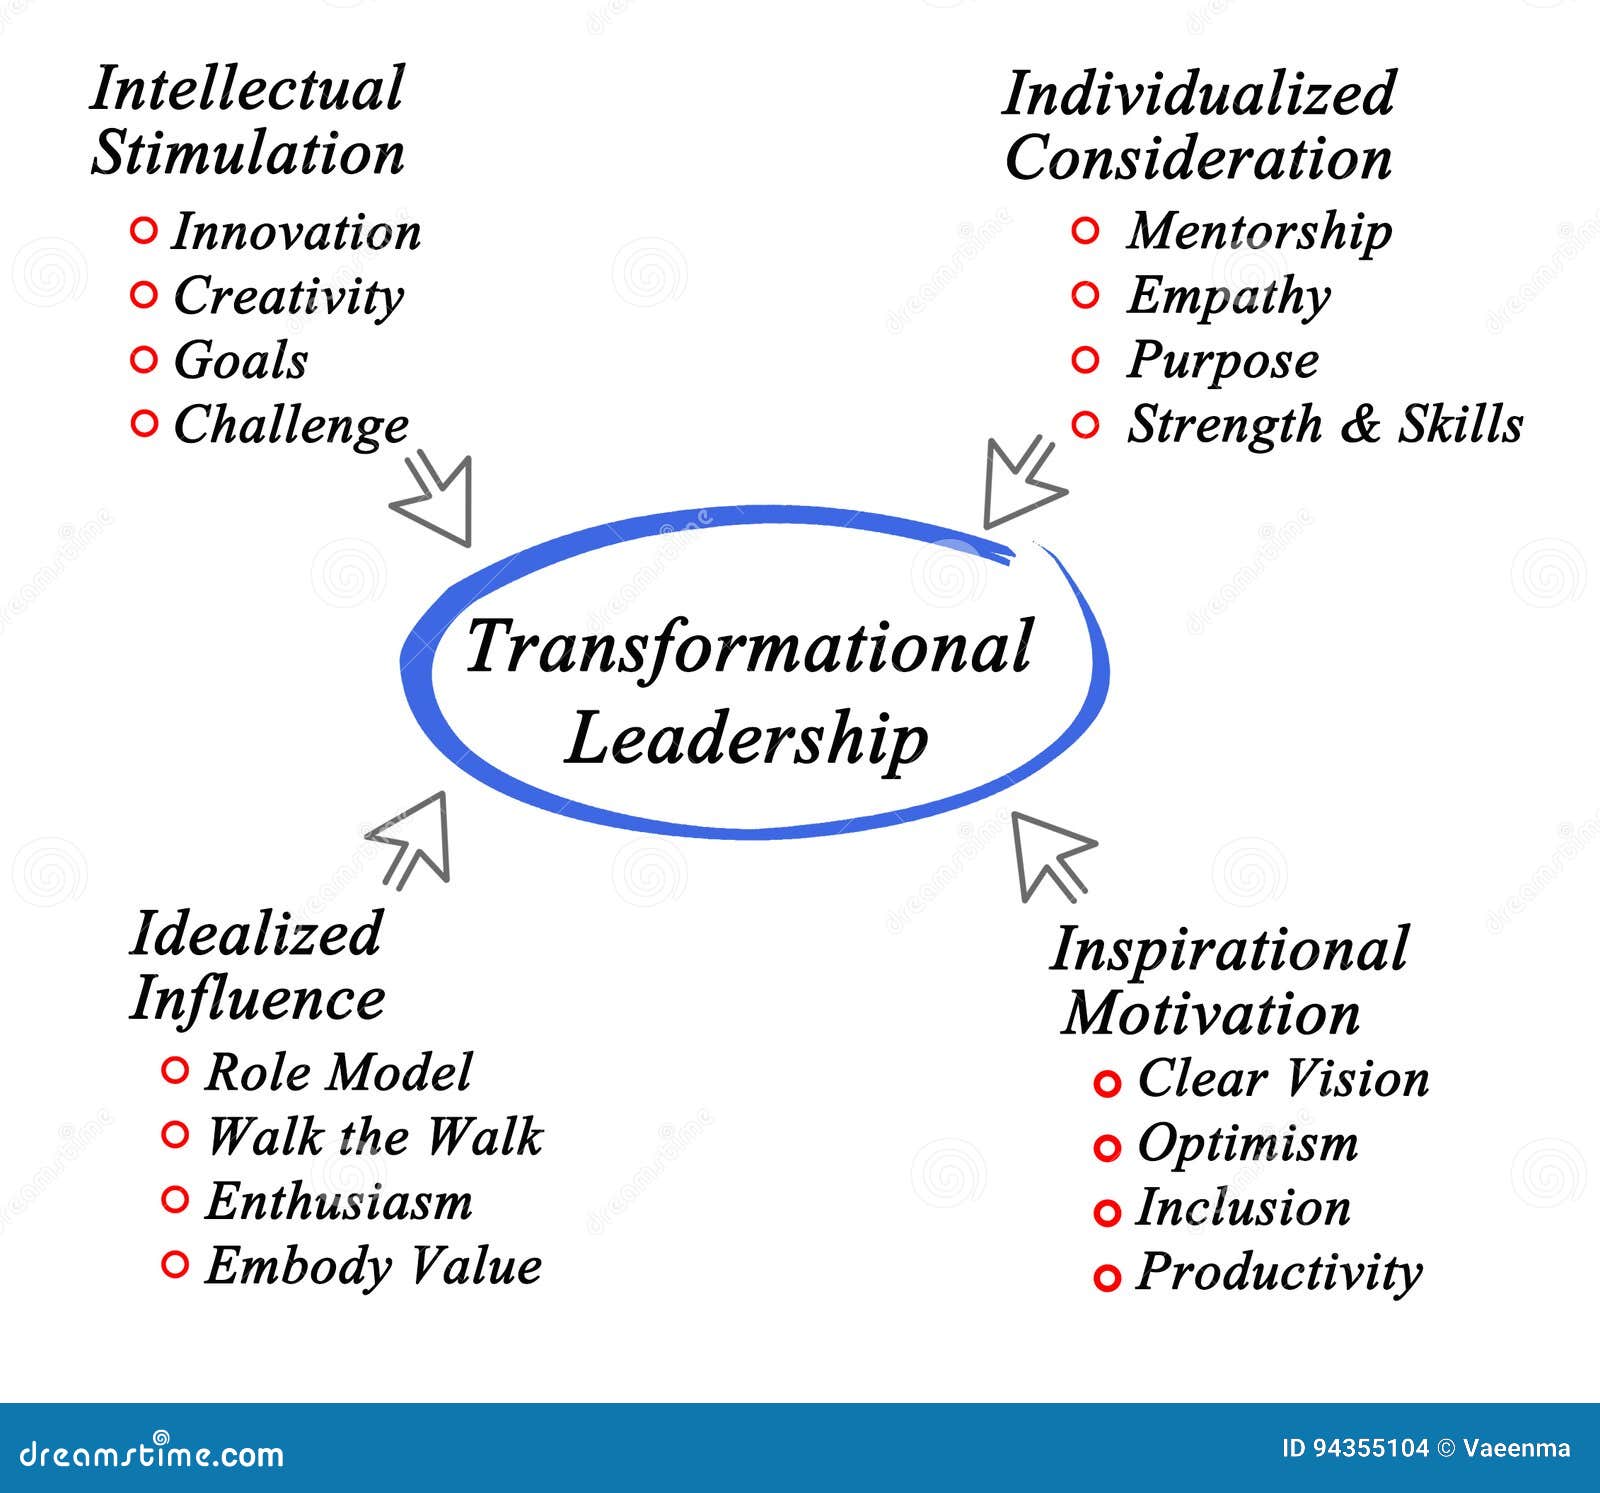 transformational leadership